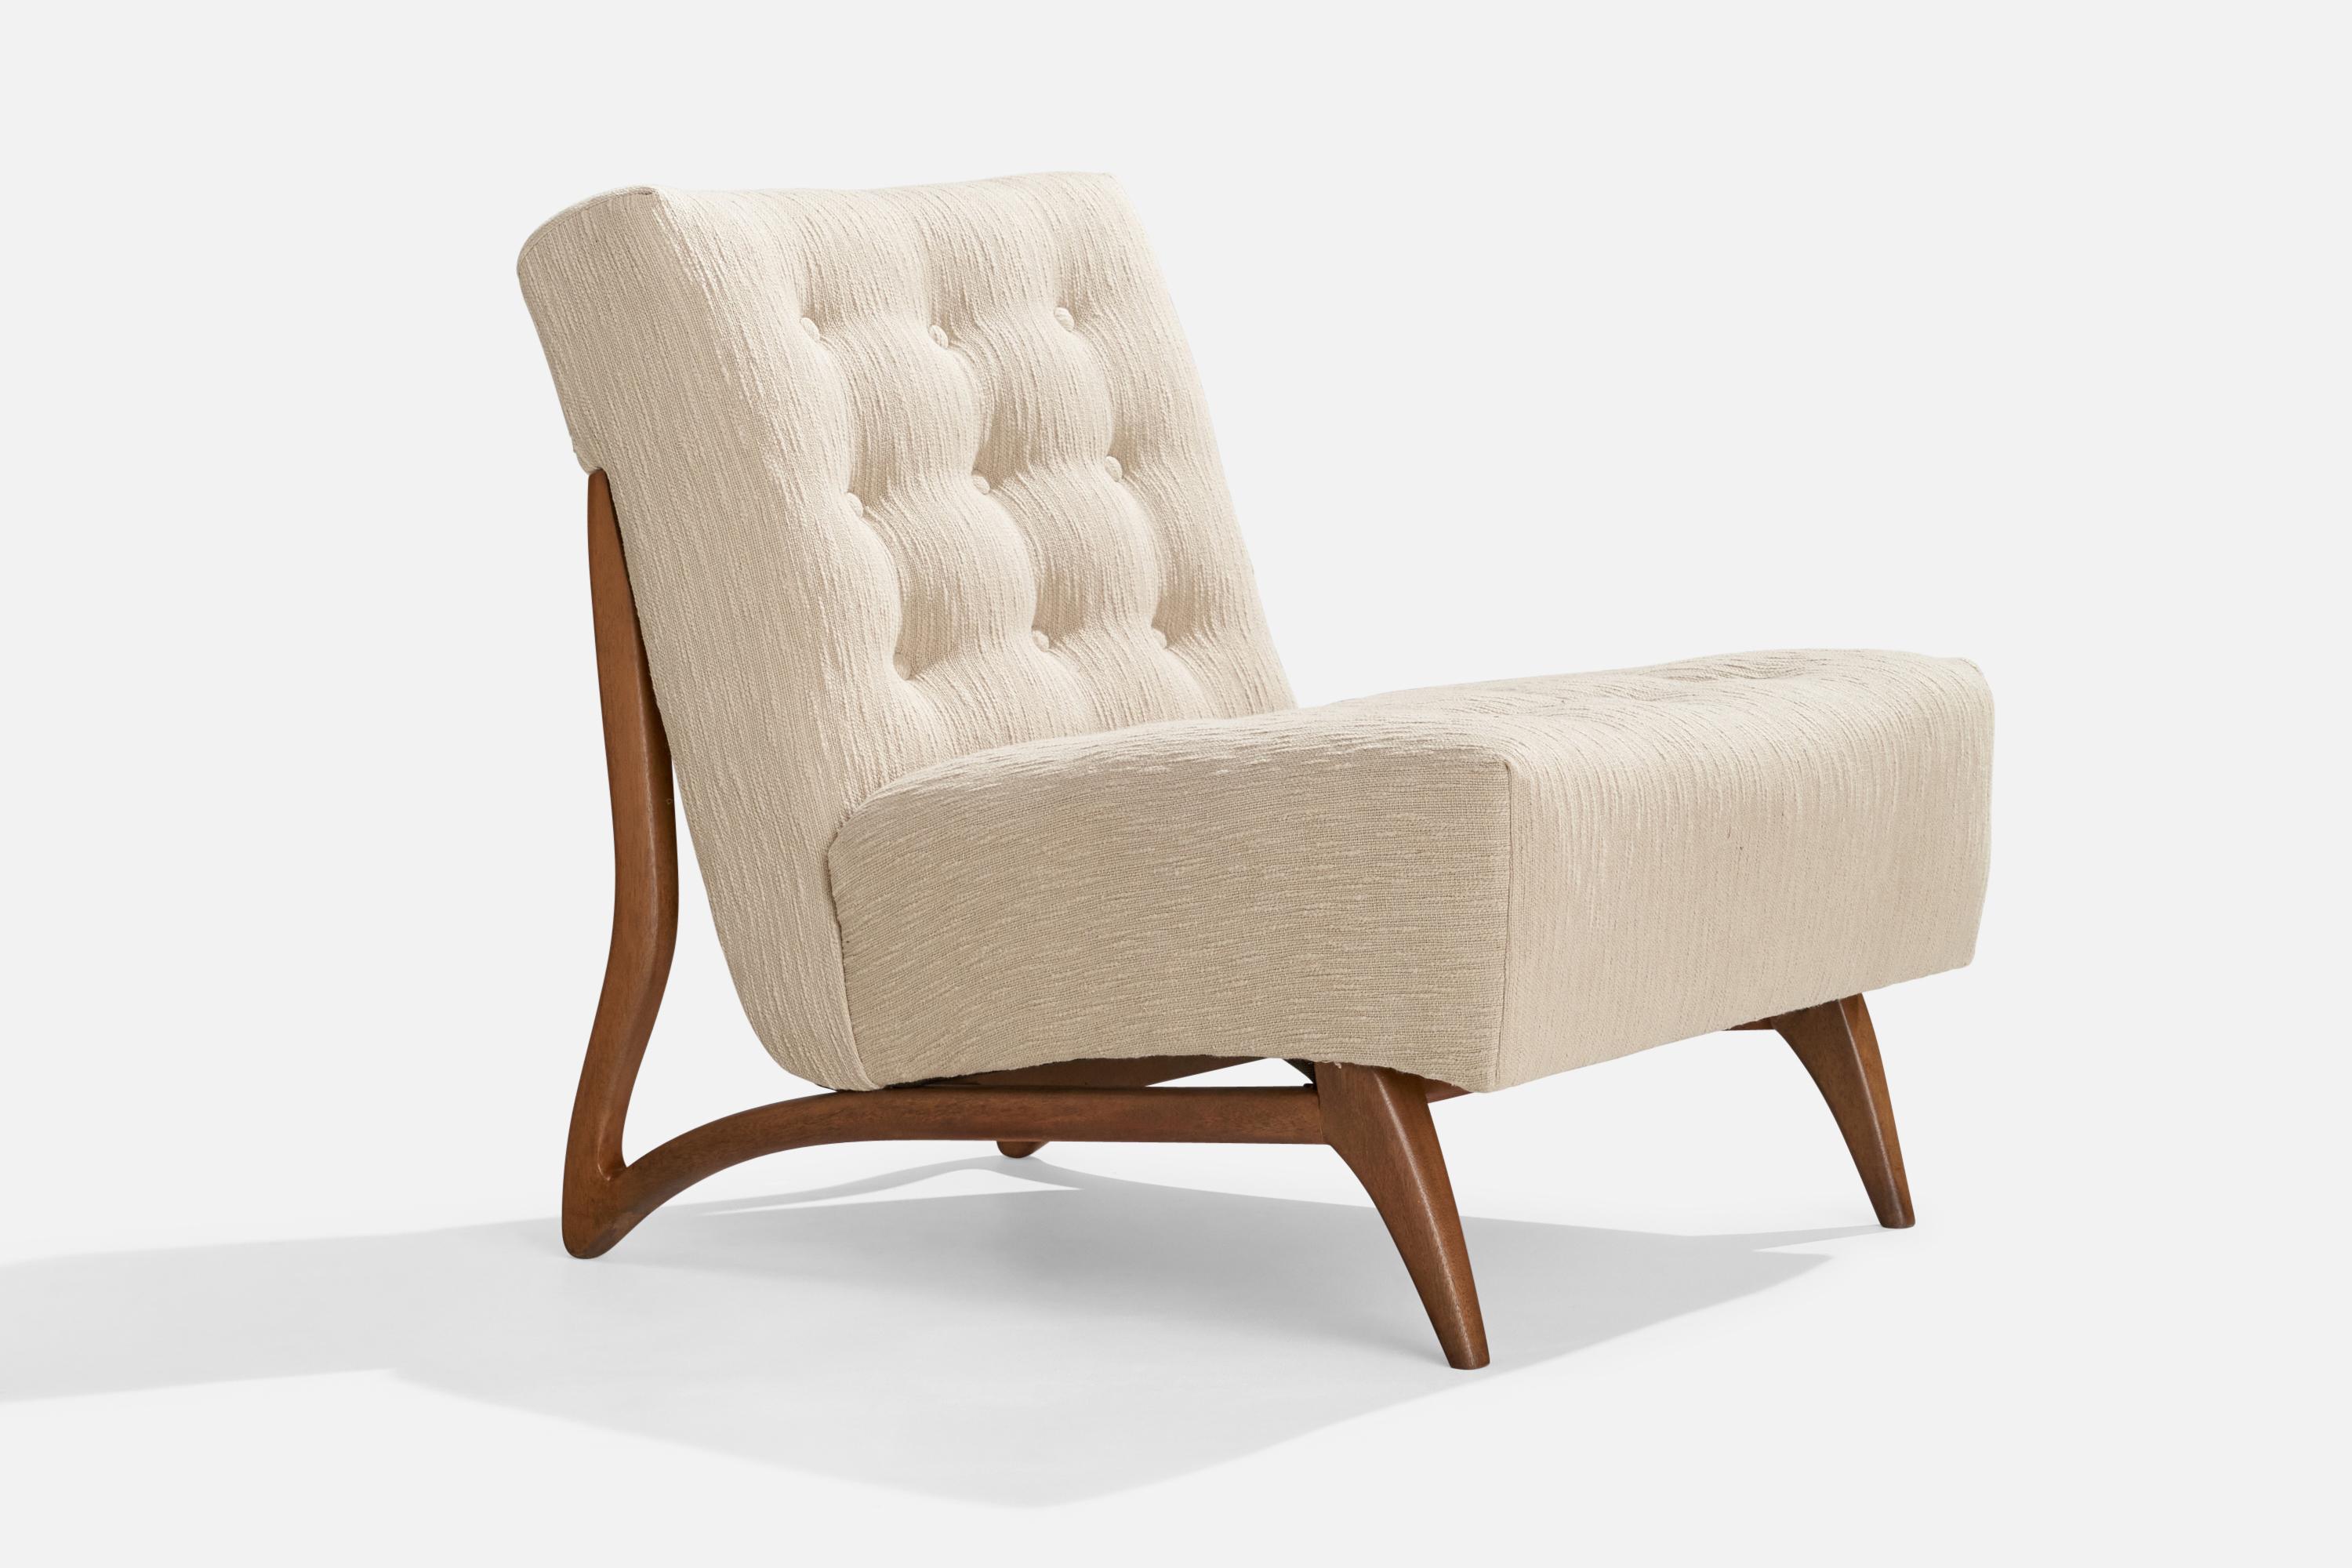 Mid-20th Century American Designer, Slipper Chairs, Walnut, Fabric, USA, 1950s For Sale